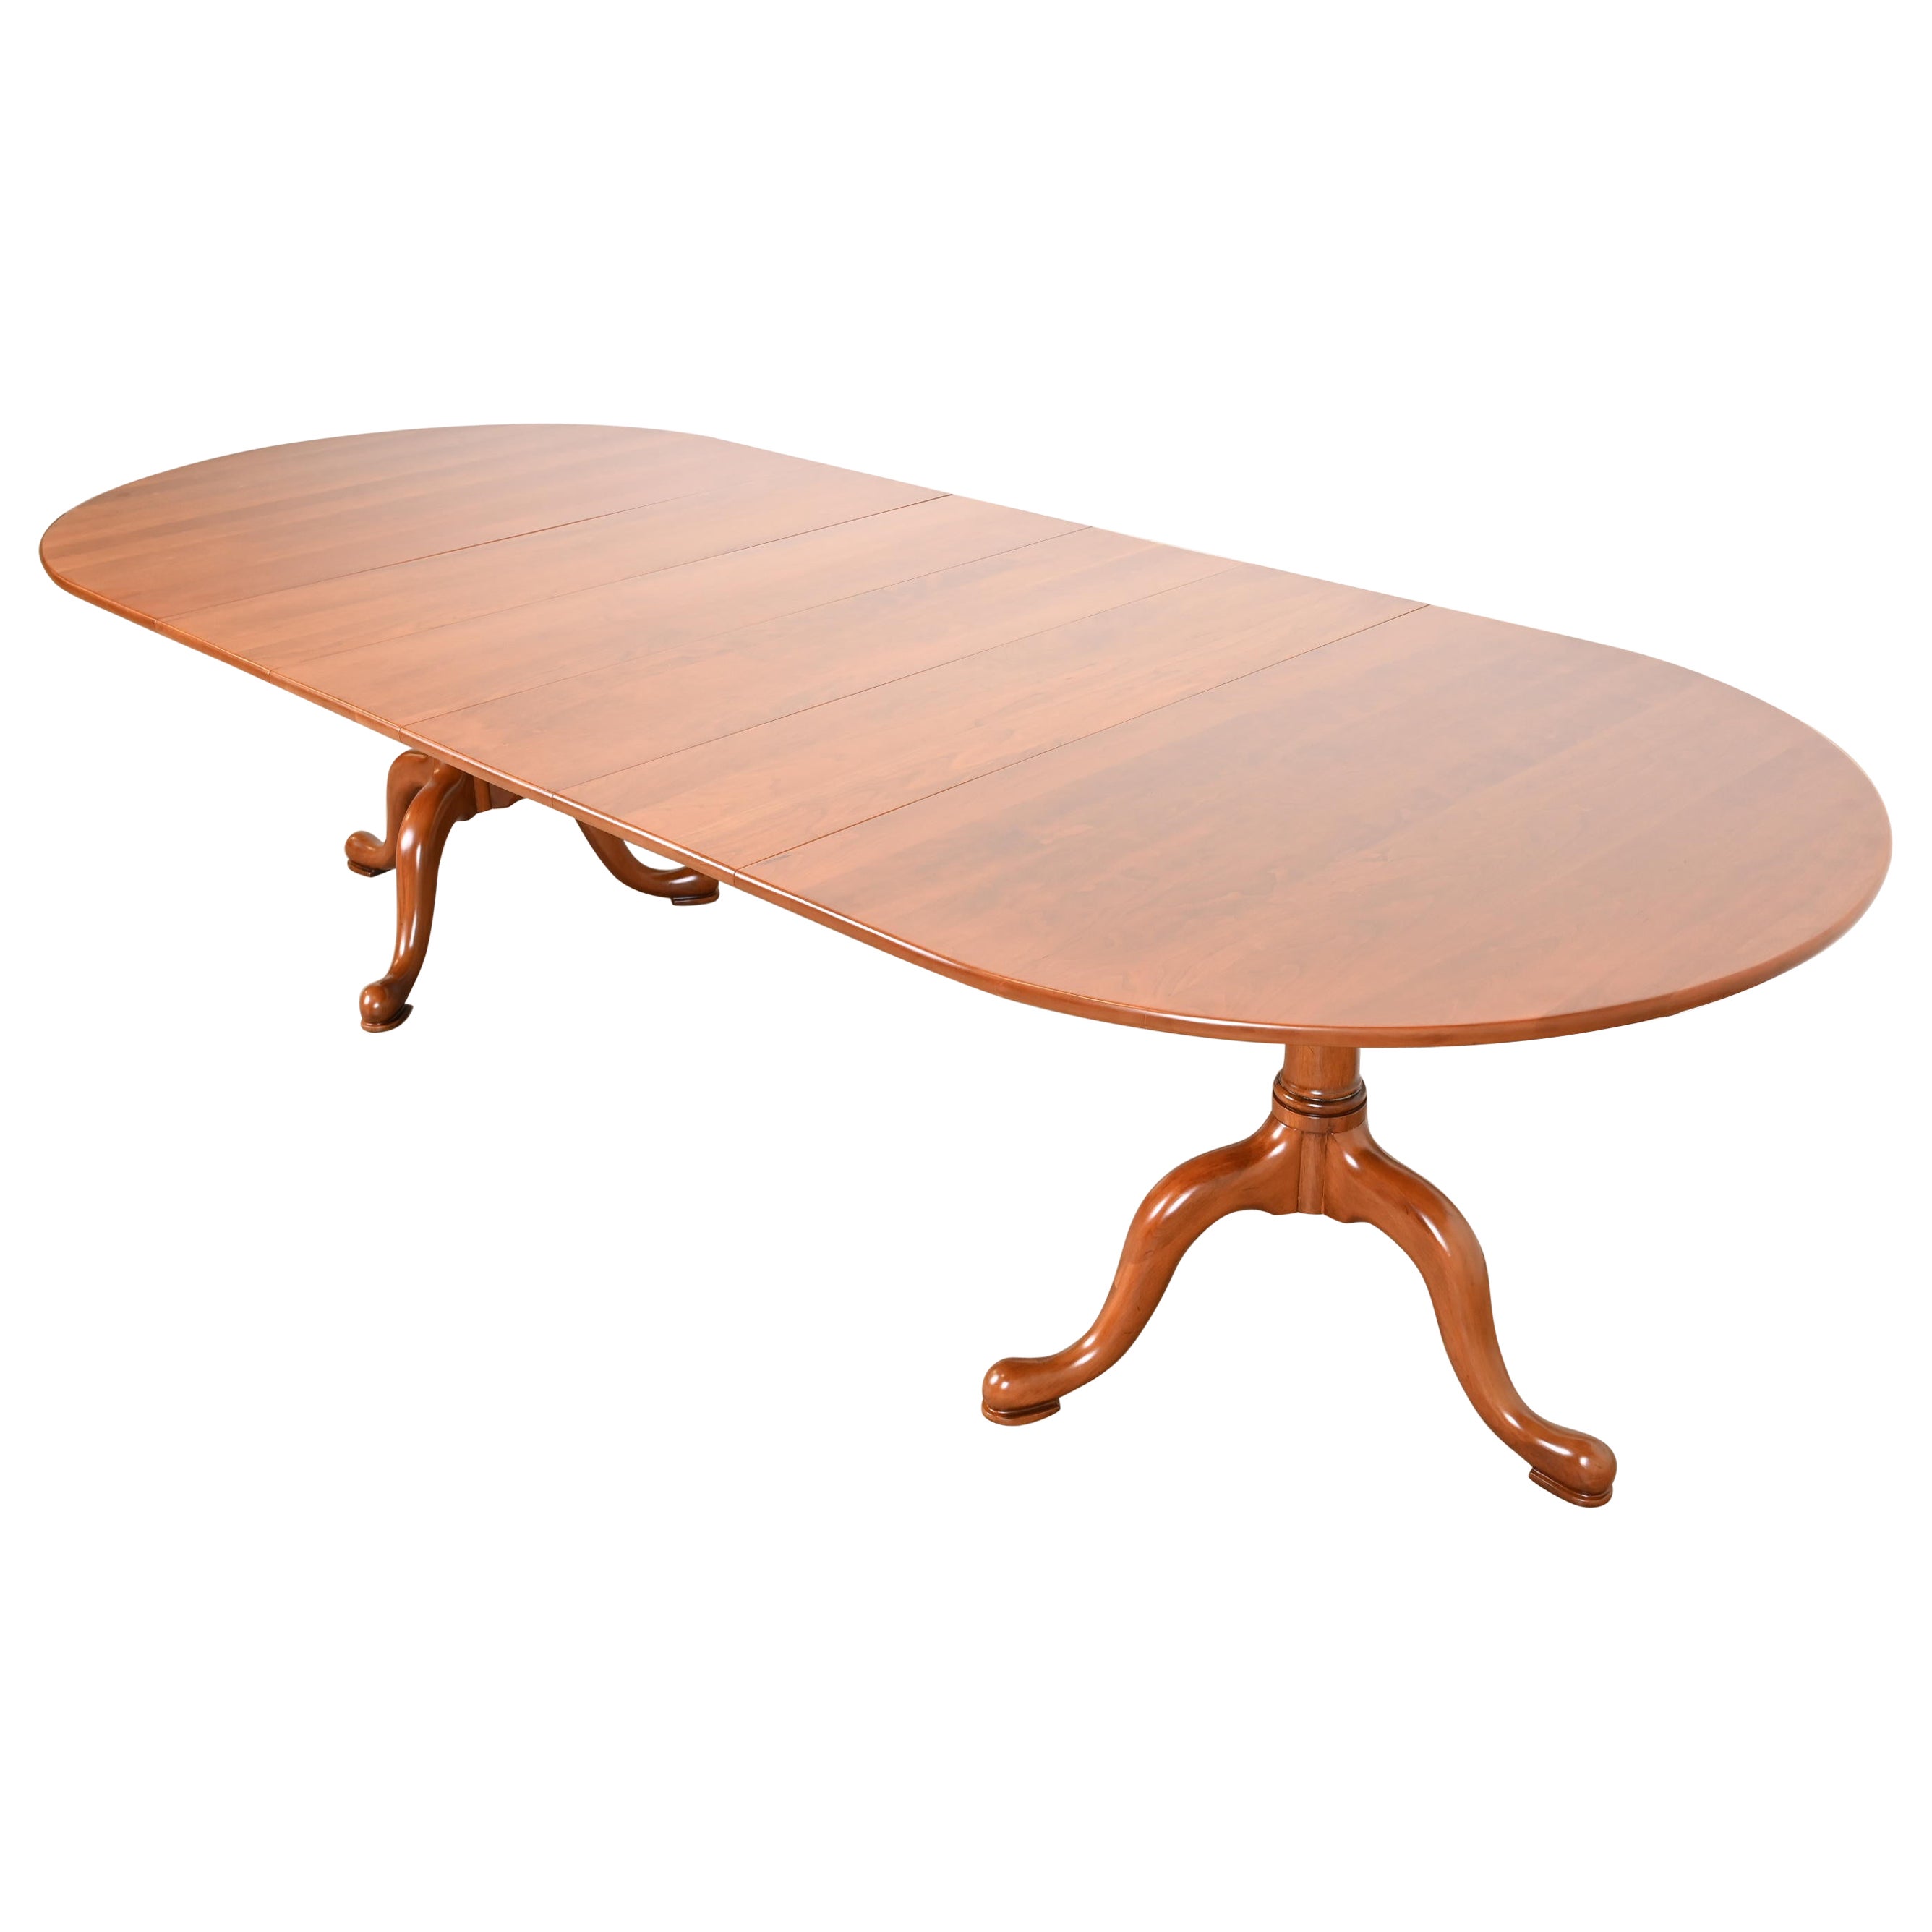 Henkel Harris Georgian Solid Cherry Wood Double Pedestal Extension Dining Table